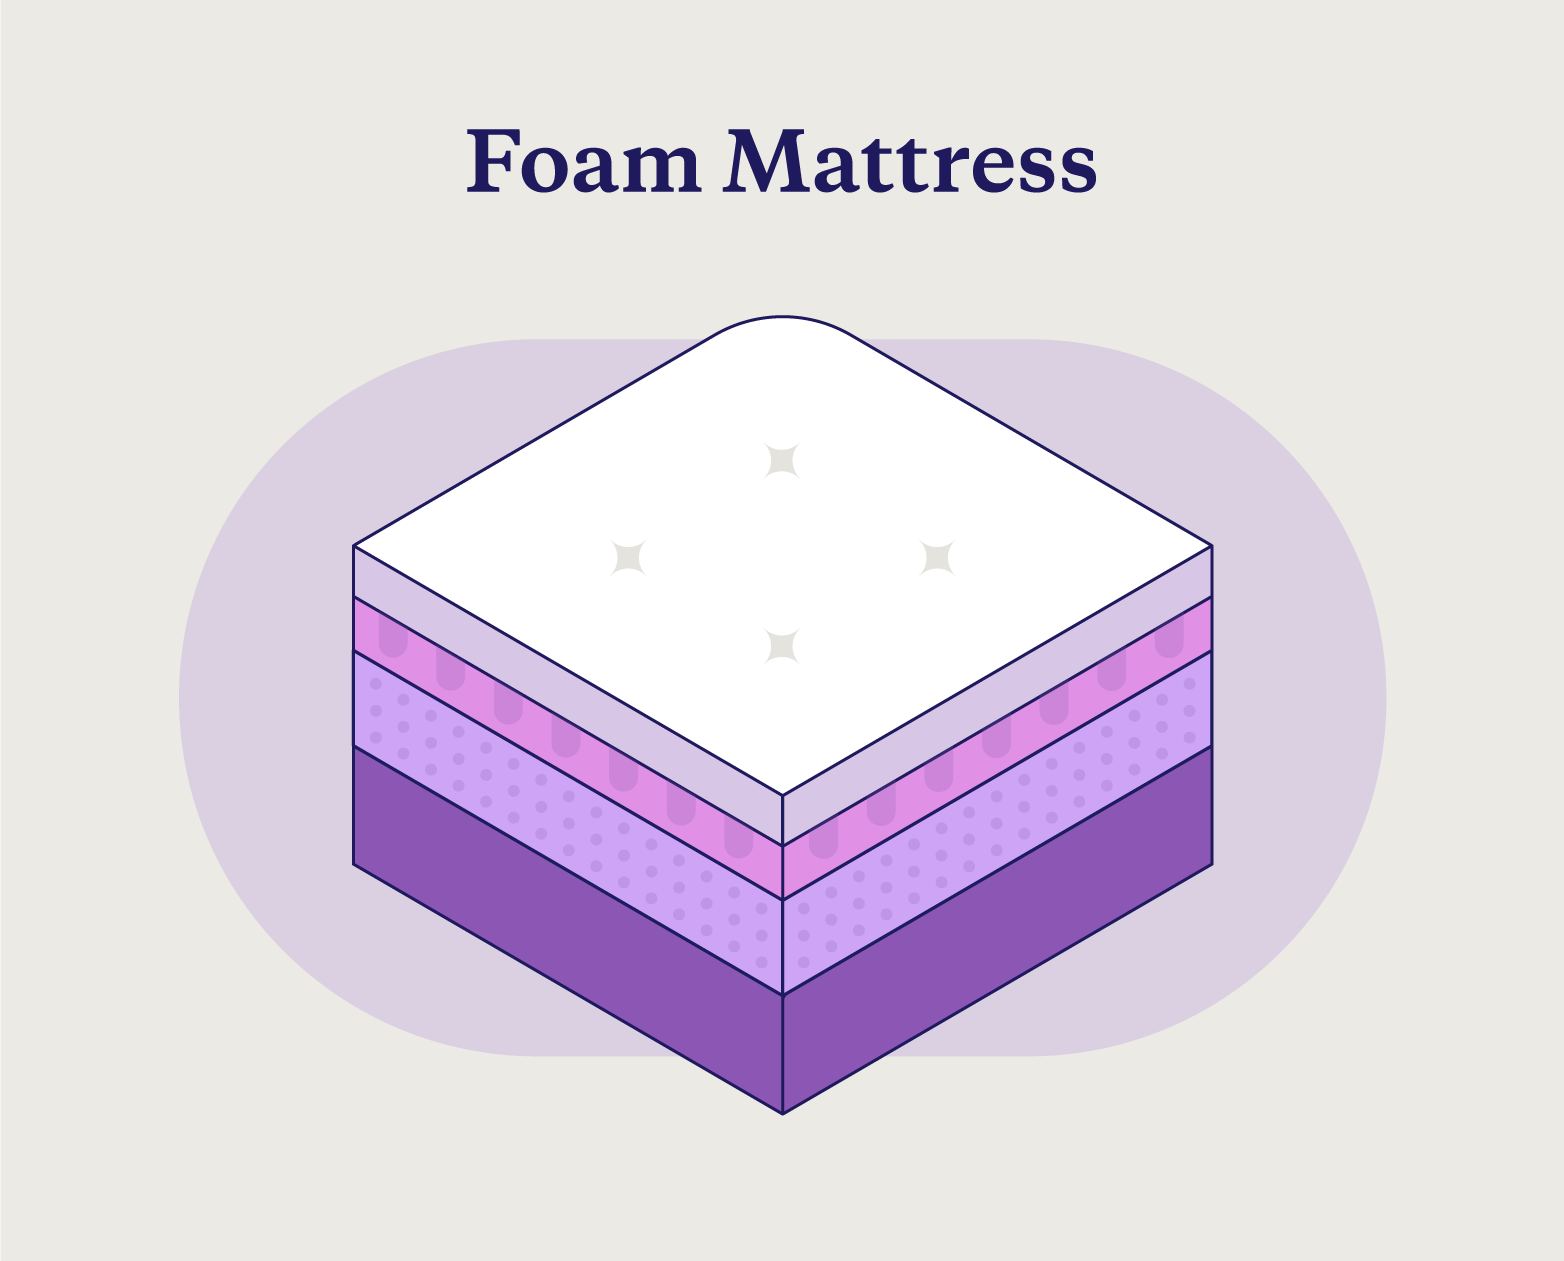 The four layers that make up a foam mattress